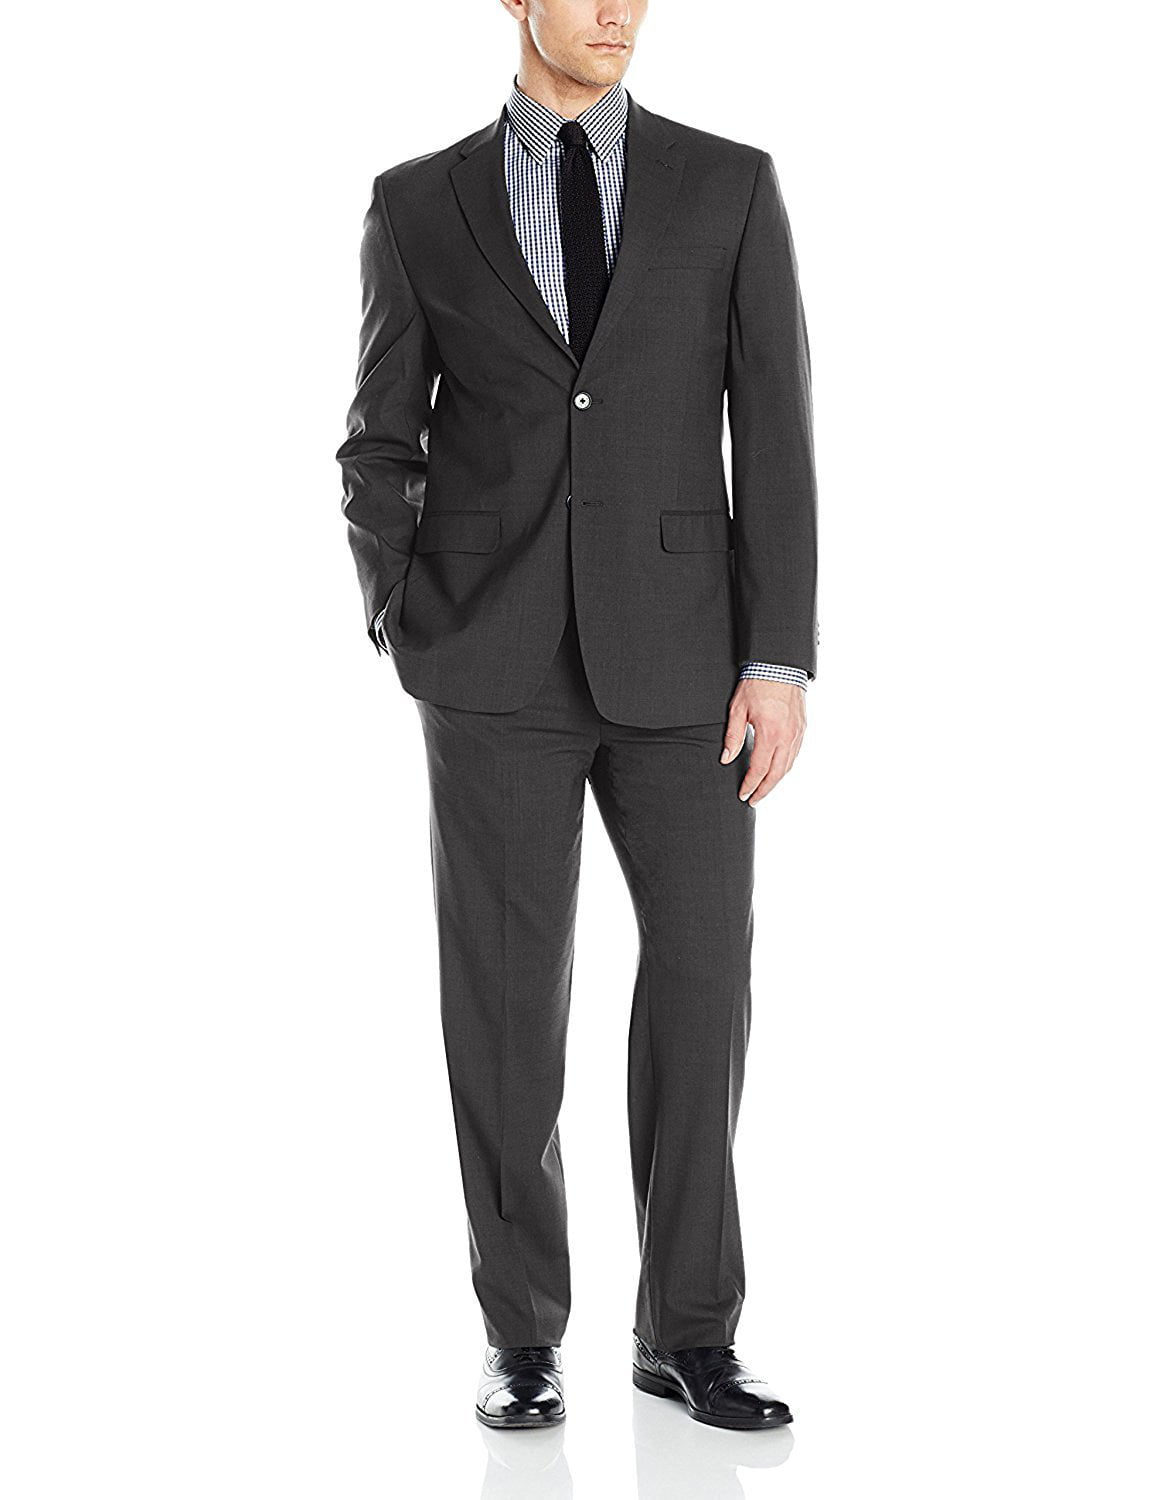 Colors Adam Baker Men's 3-Piece Single Breasted Slim Fit Suit & Tuxedo